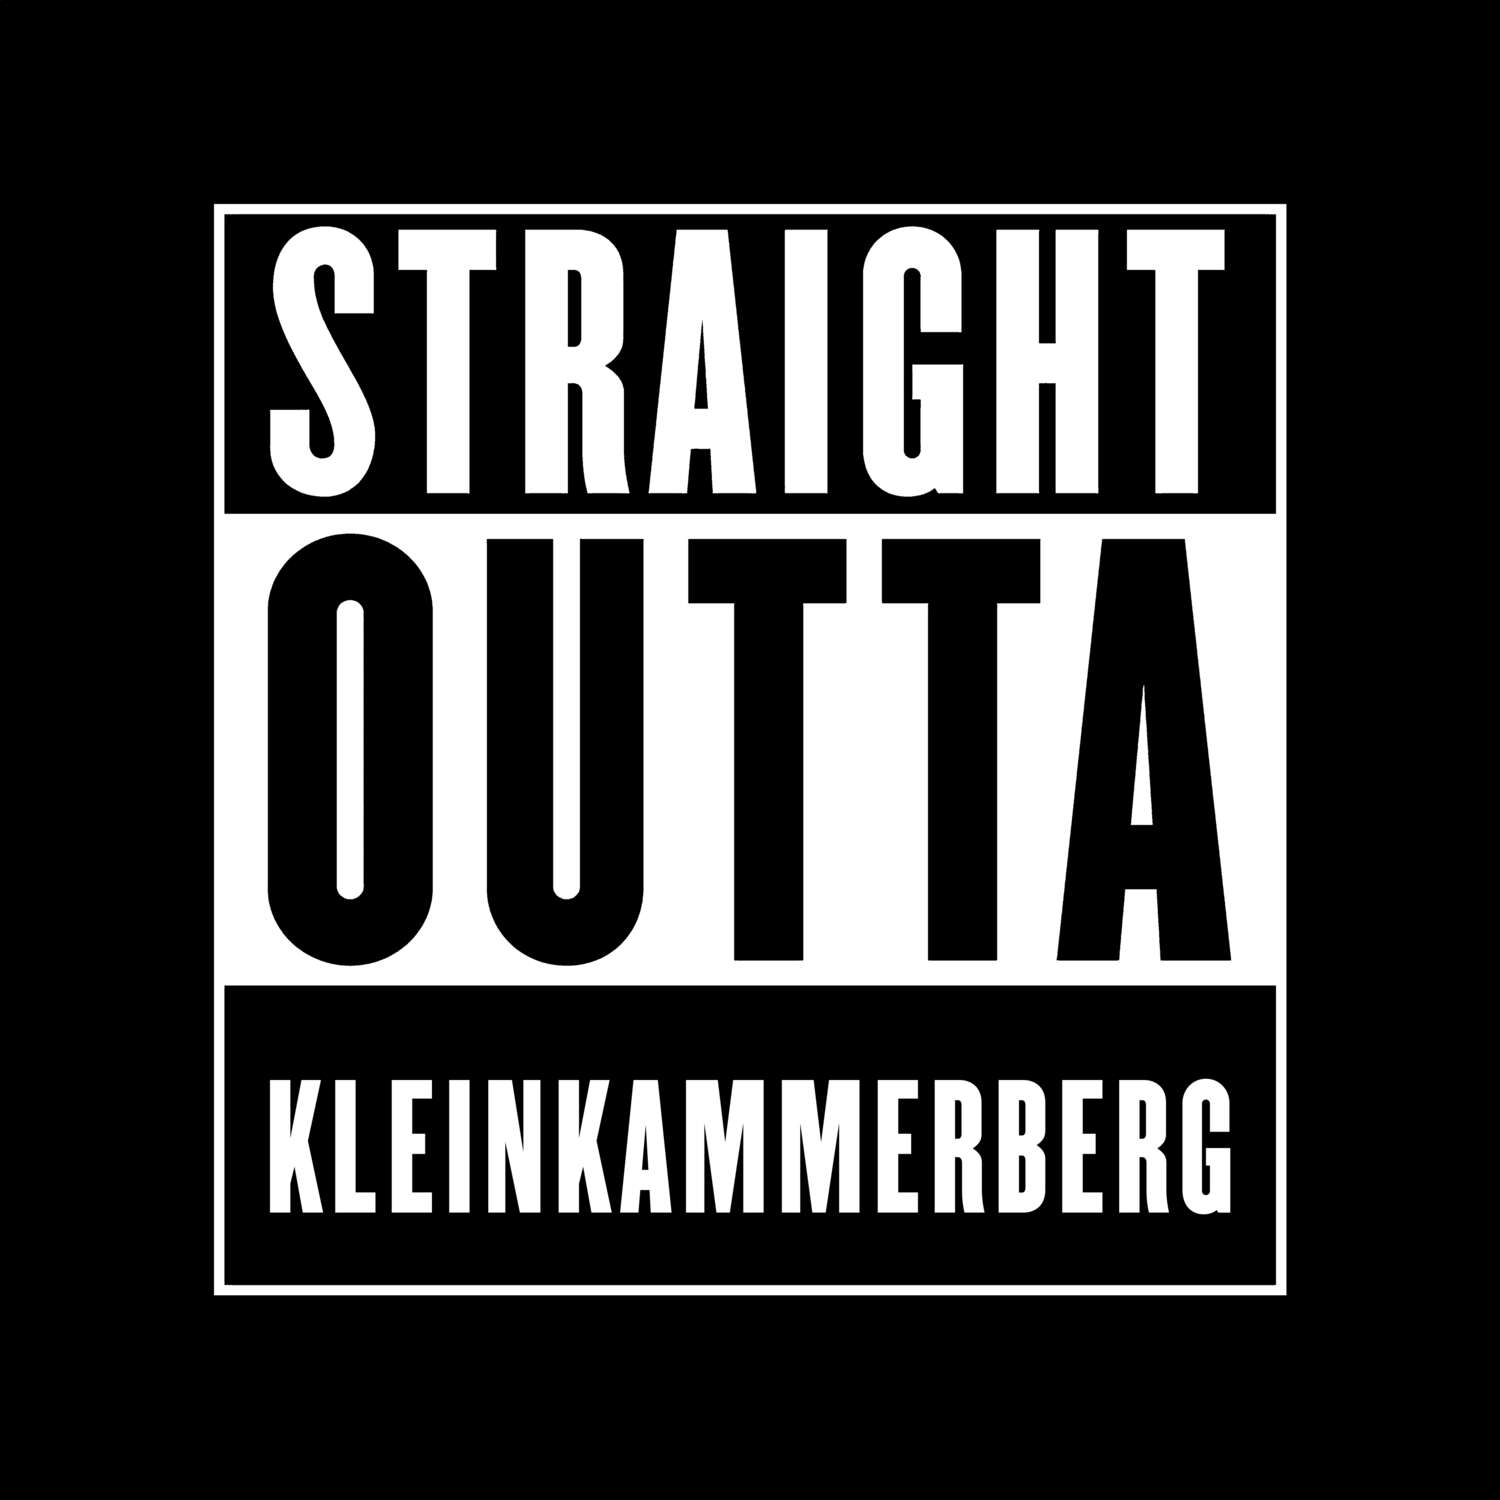 Kleinkammerberg T-Shirt »Straight Outta«